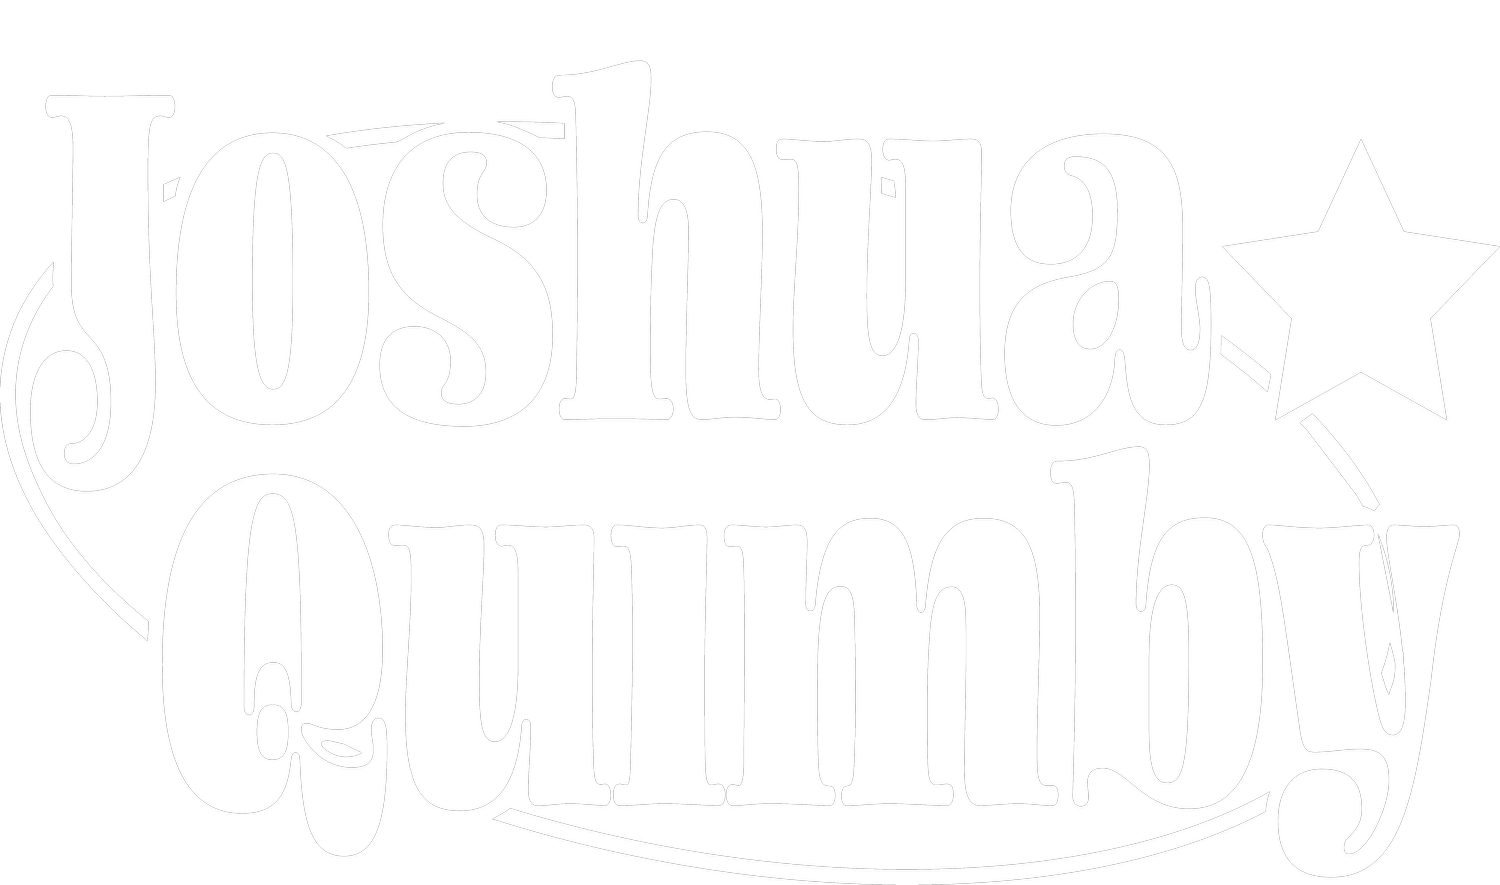 Joshua Quimby